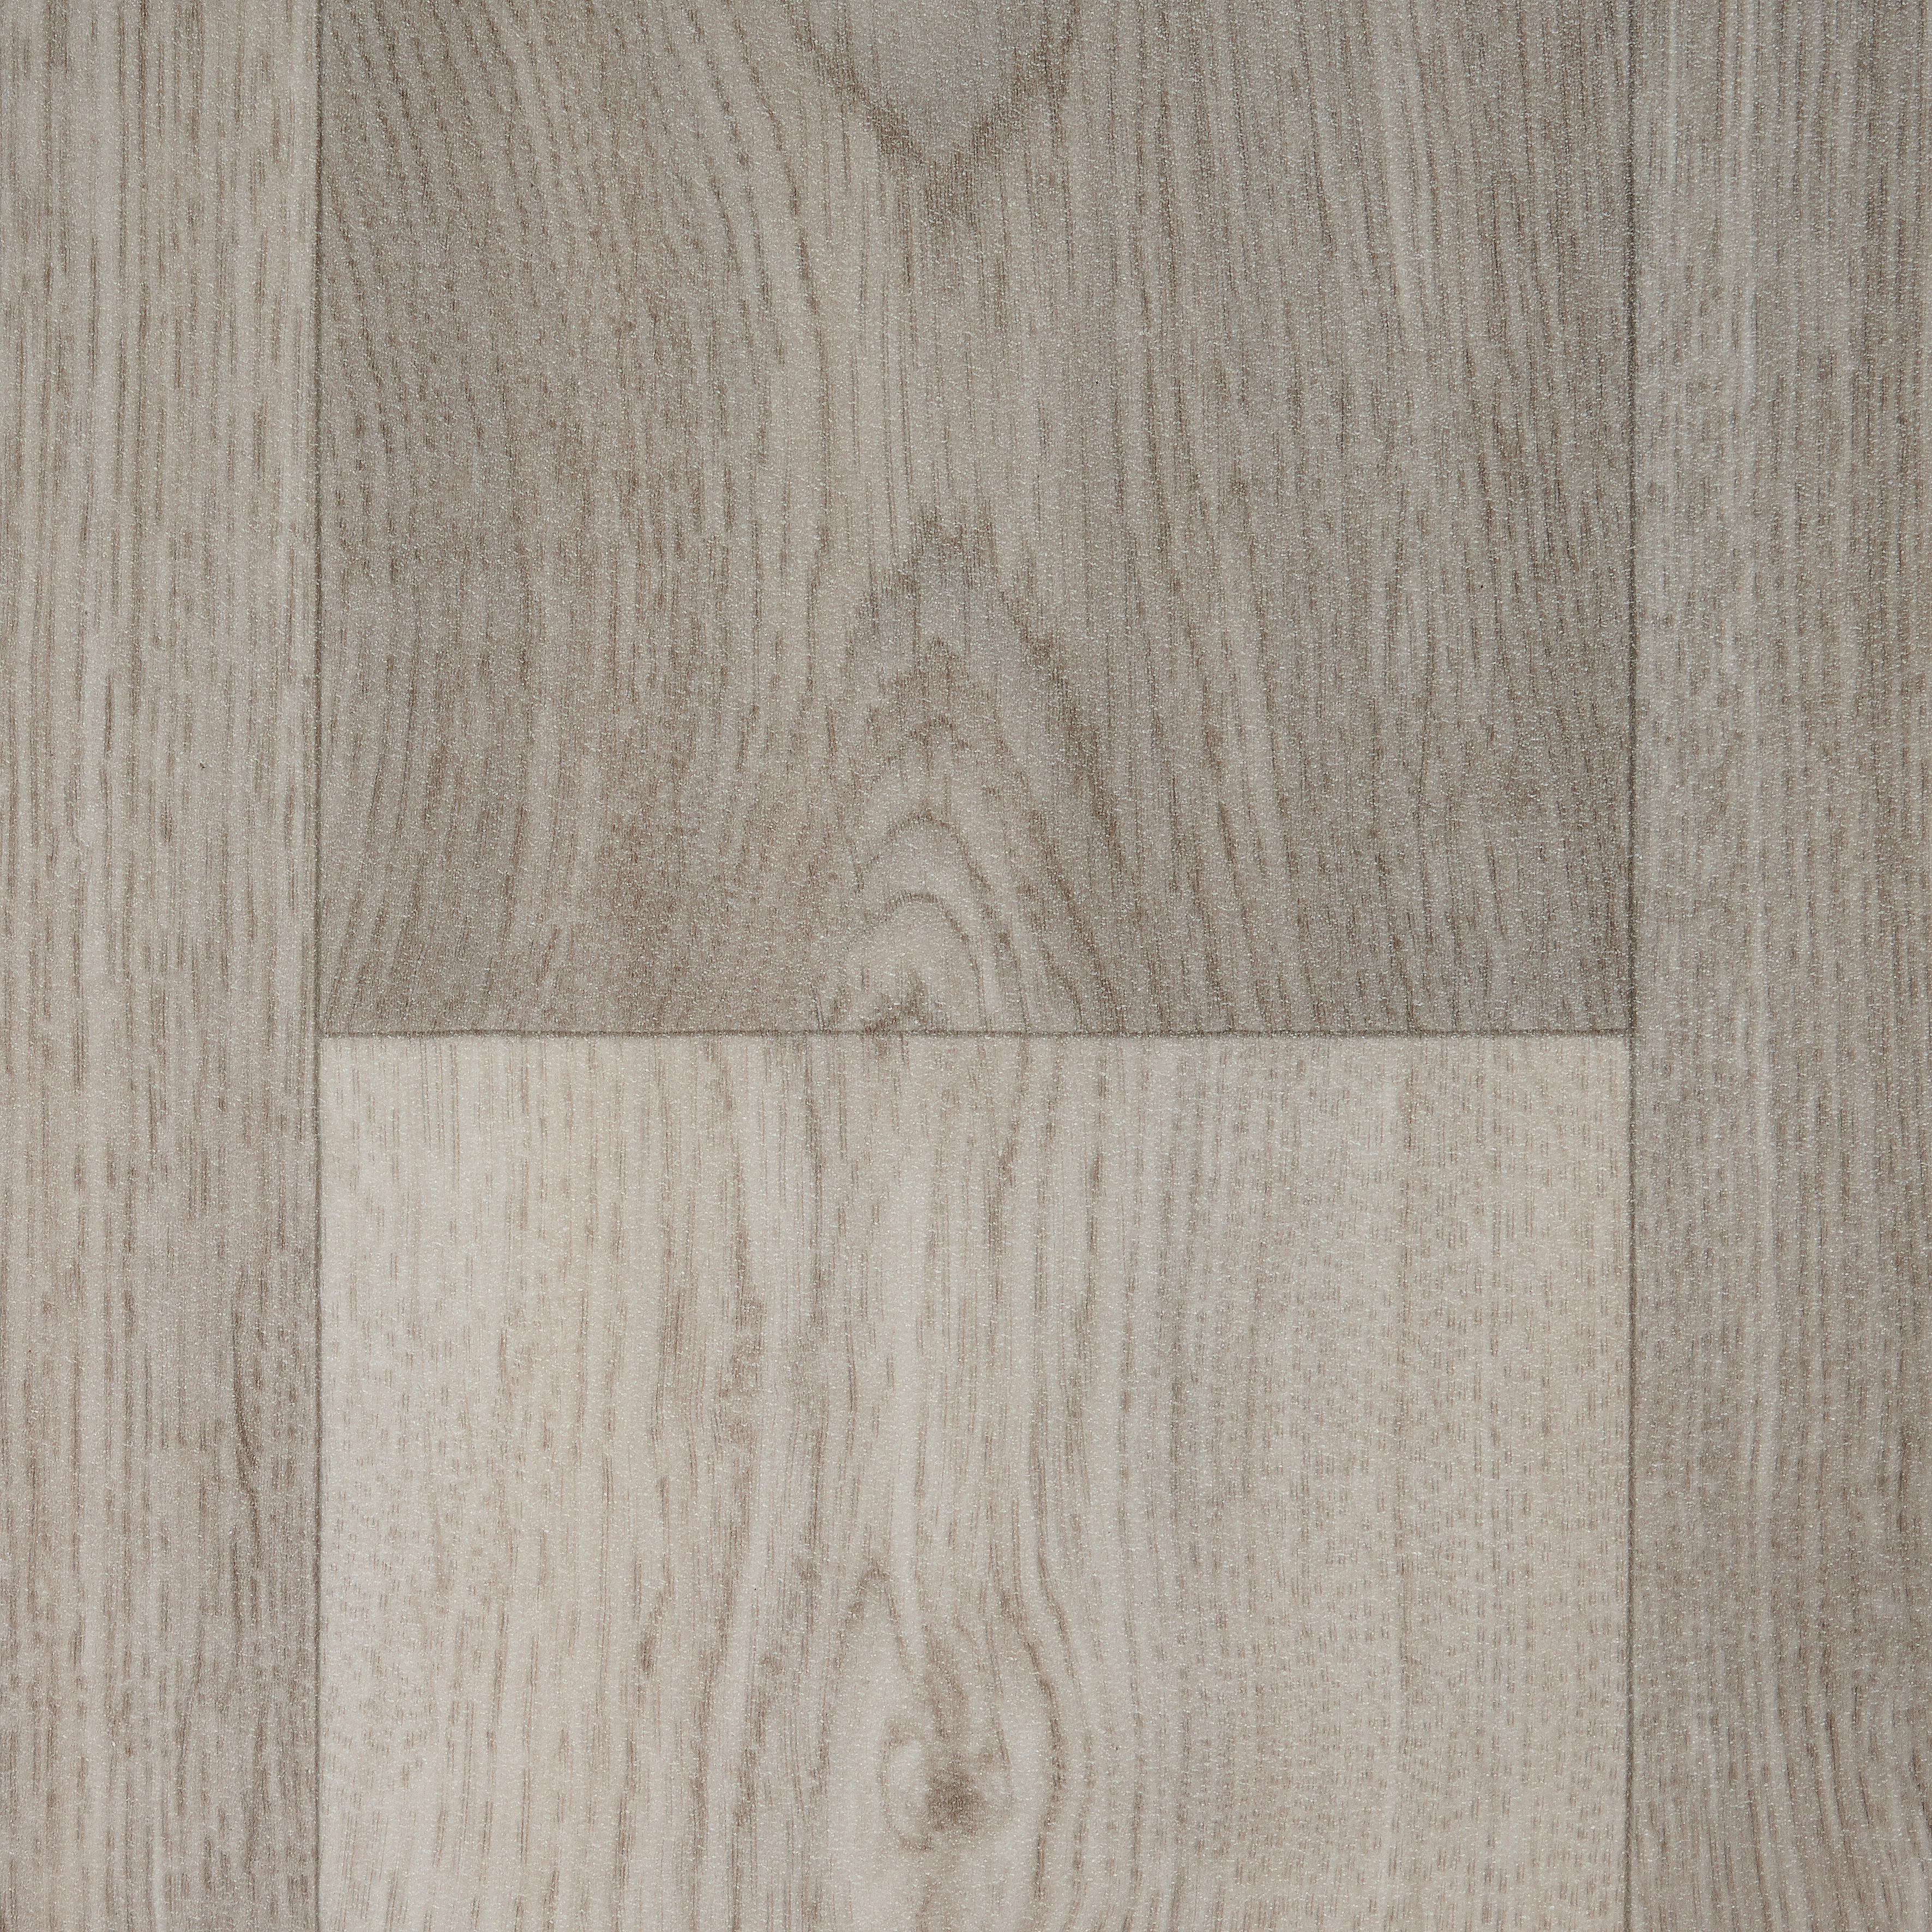 Vinylboden pro m² Eiche grau B: ca. 300 cm CV-Belag_Completo 300cm Lumber 592 - grau (300,00cm)